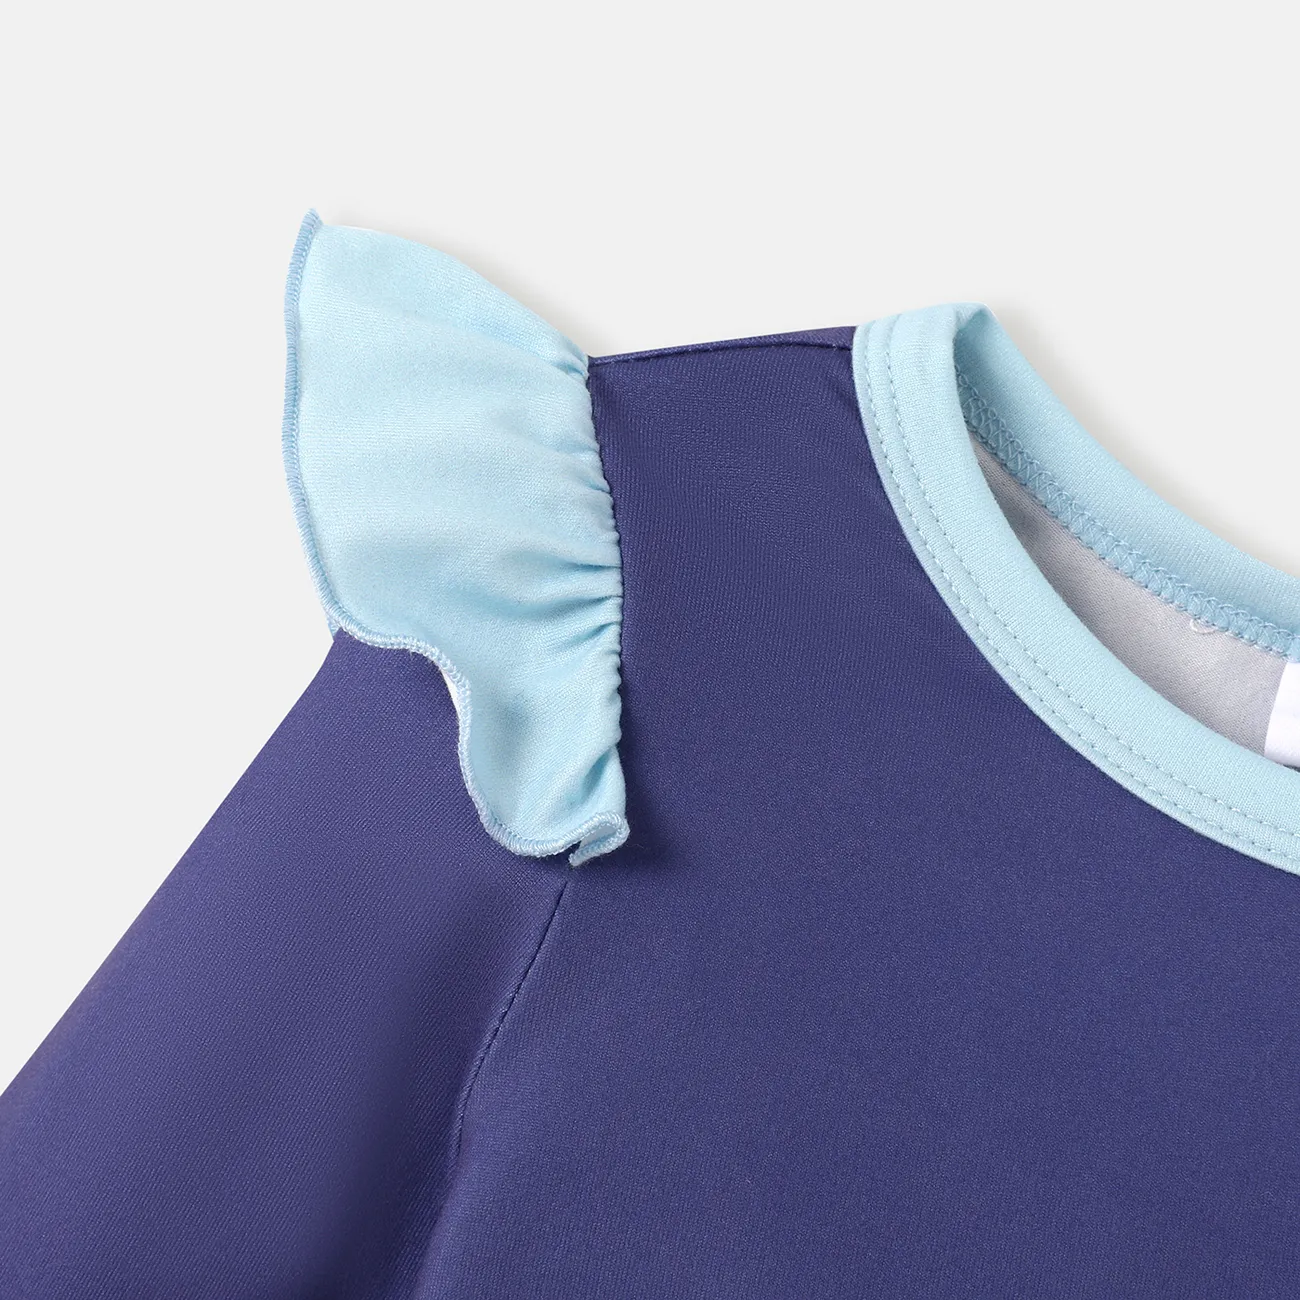 Disney Princess Toddler Girl Character Print Ruffled Long-sleeve Dress  Purple big image 1